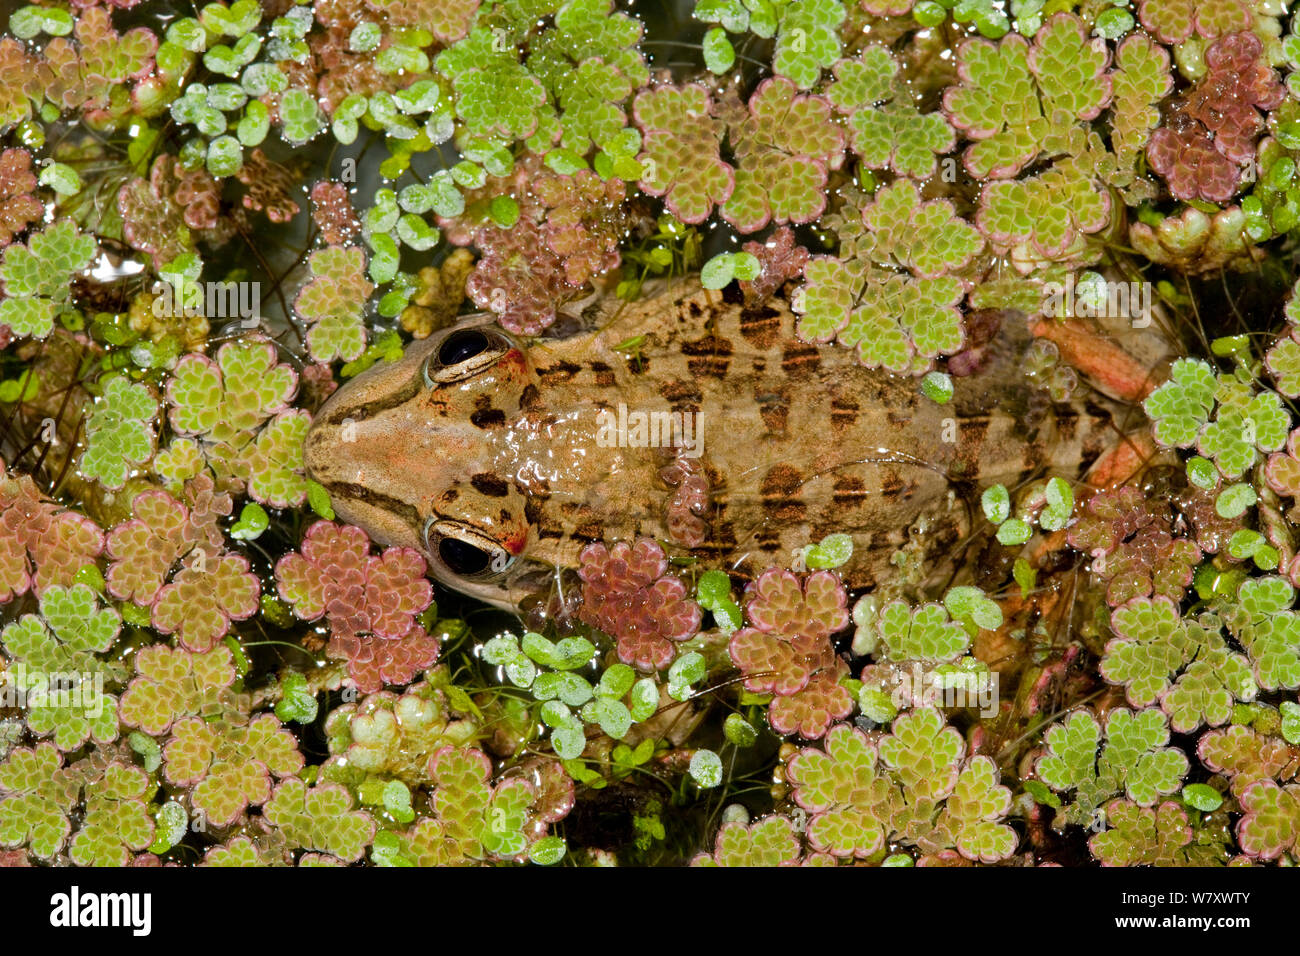 Mascarene Grass Frog (Ptychadena mascareniensis) camouflaged among water plants, captive endemic to Madagascar. Stock Photo